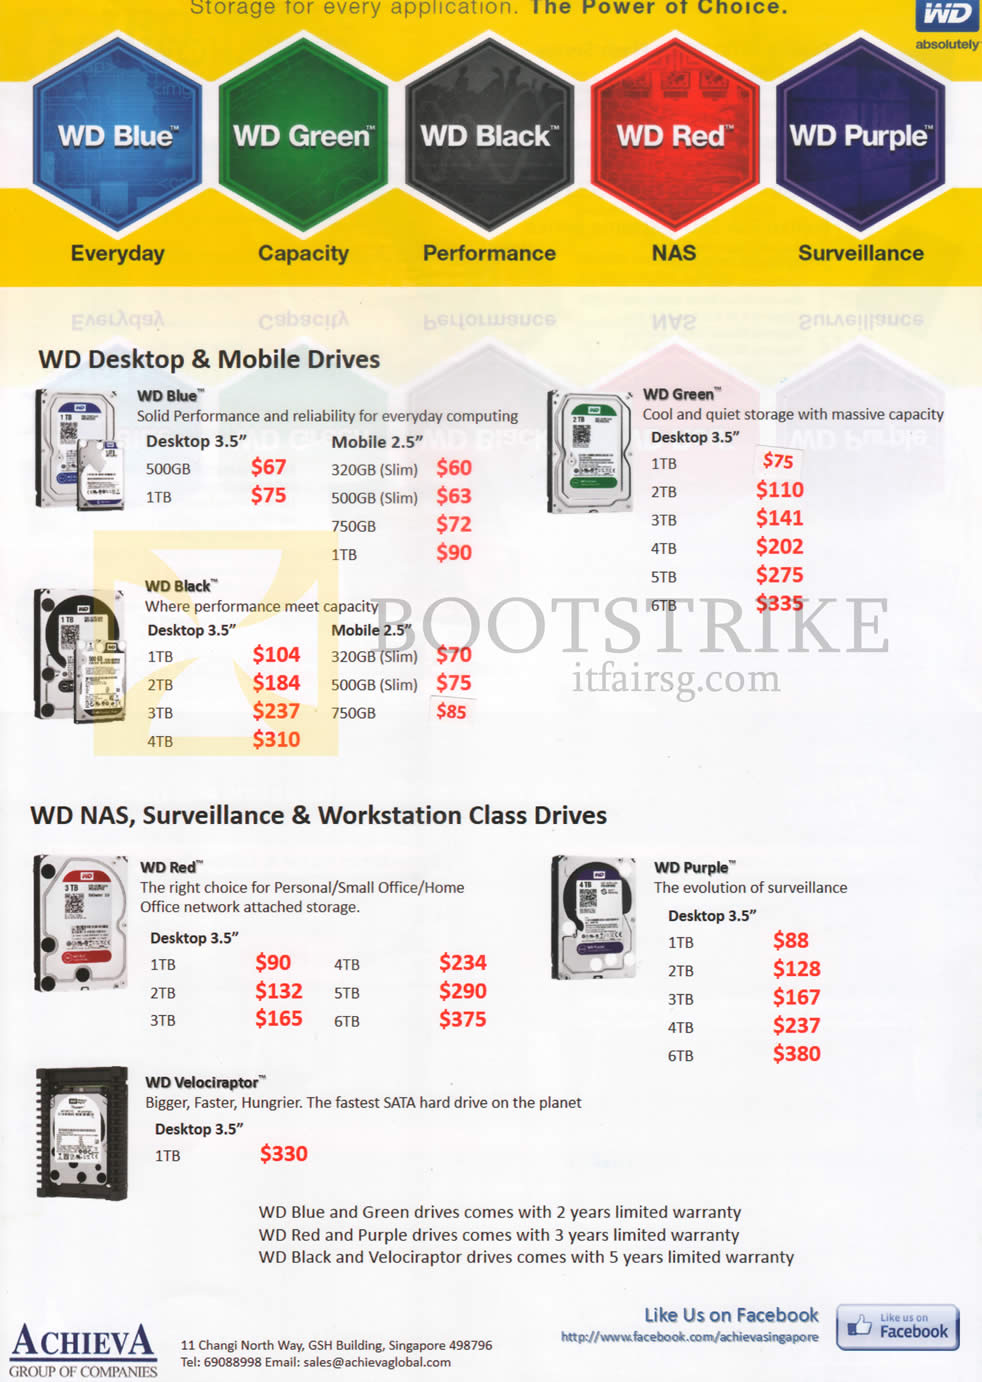 PC SHOW 2015 price list image brochure of Achieva Western Digital Internal Drives, NAS, Surveillance, Workstation Class Drives, Blue Green Black Red Purple Velociraptor